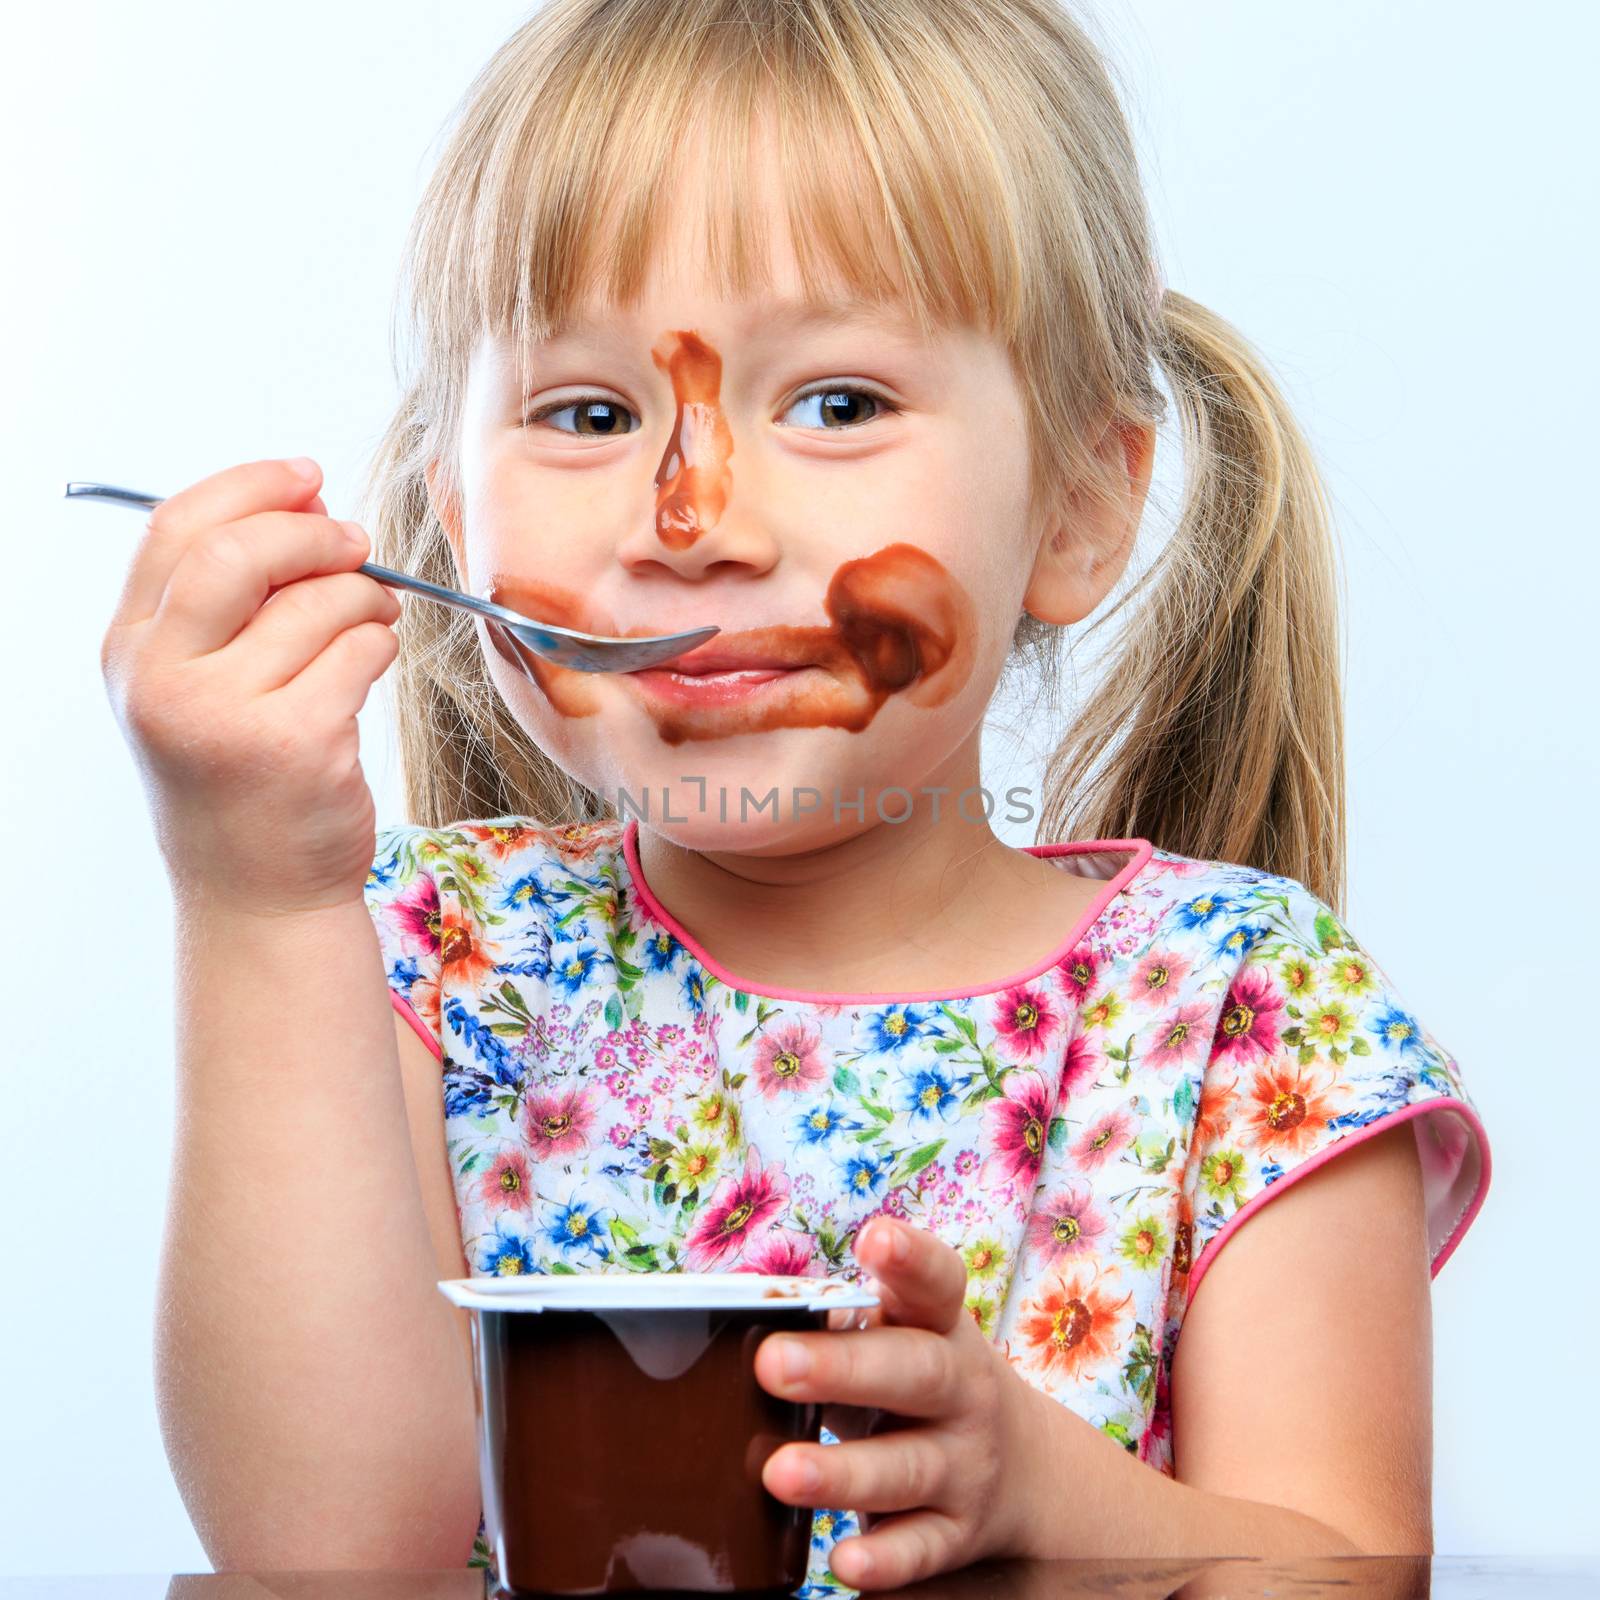 Cute girl eating chocolate yogurt. by karelnoppe